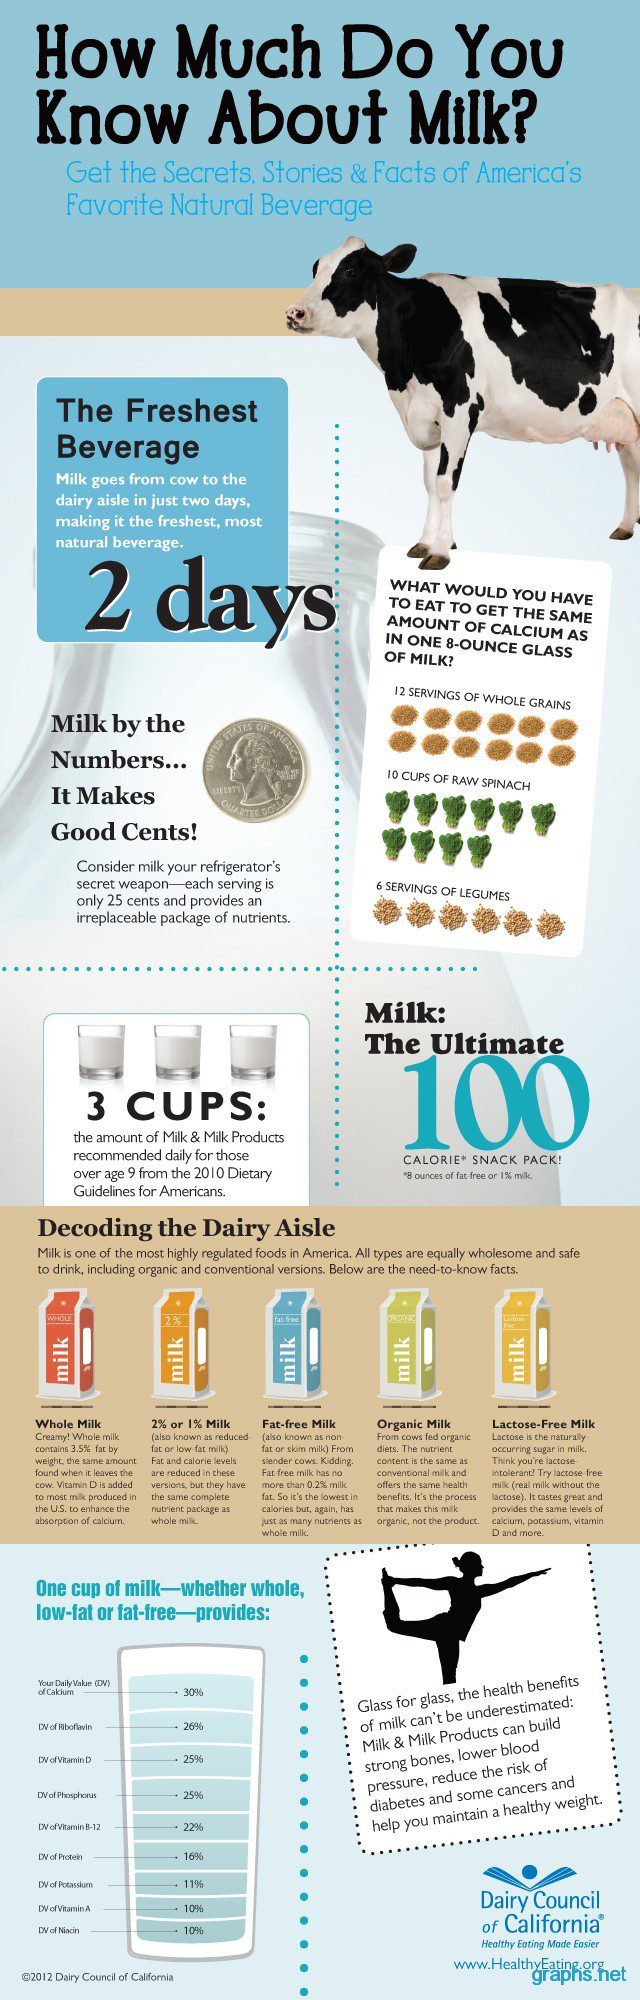 Who Invented the Milk Carton